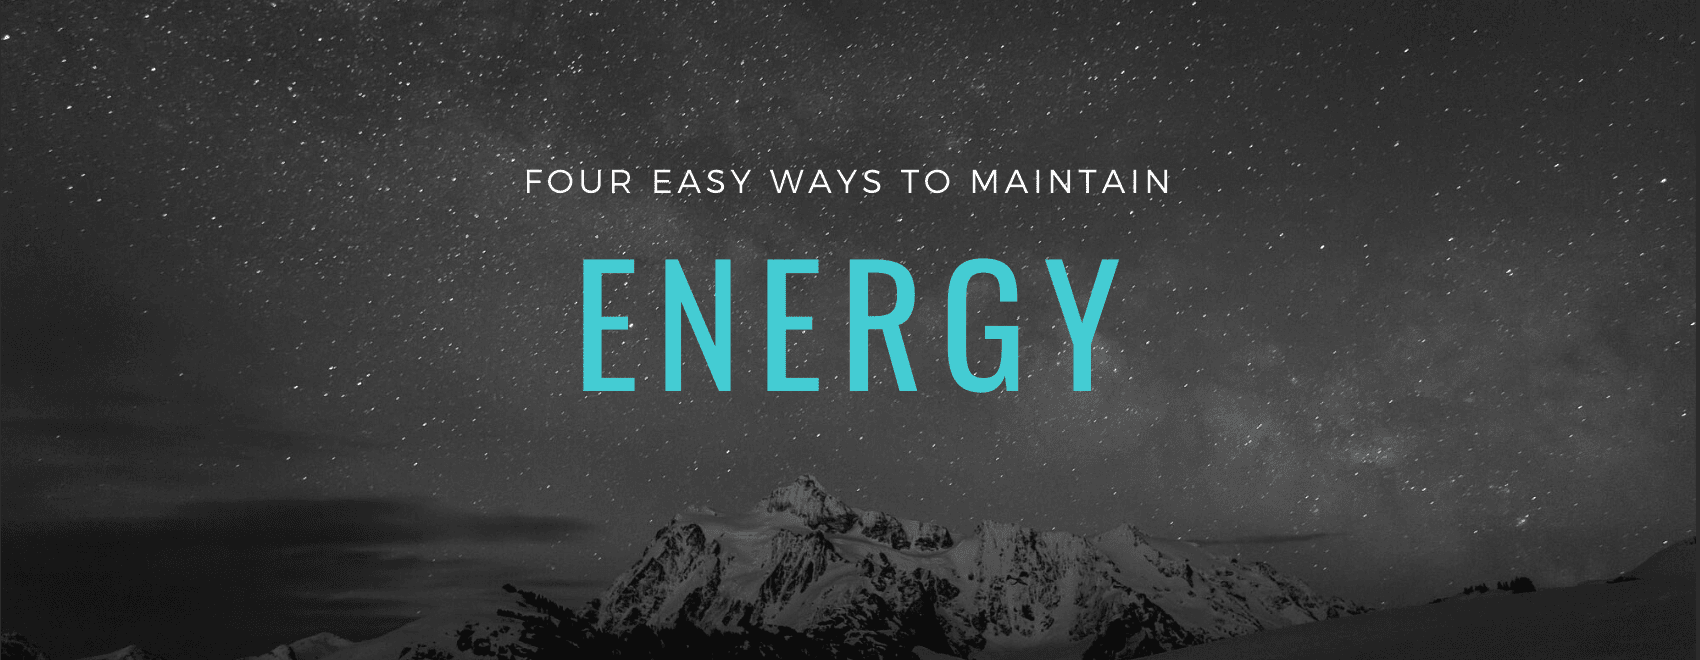 easy ways to maintain energy